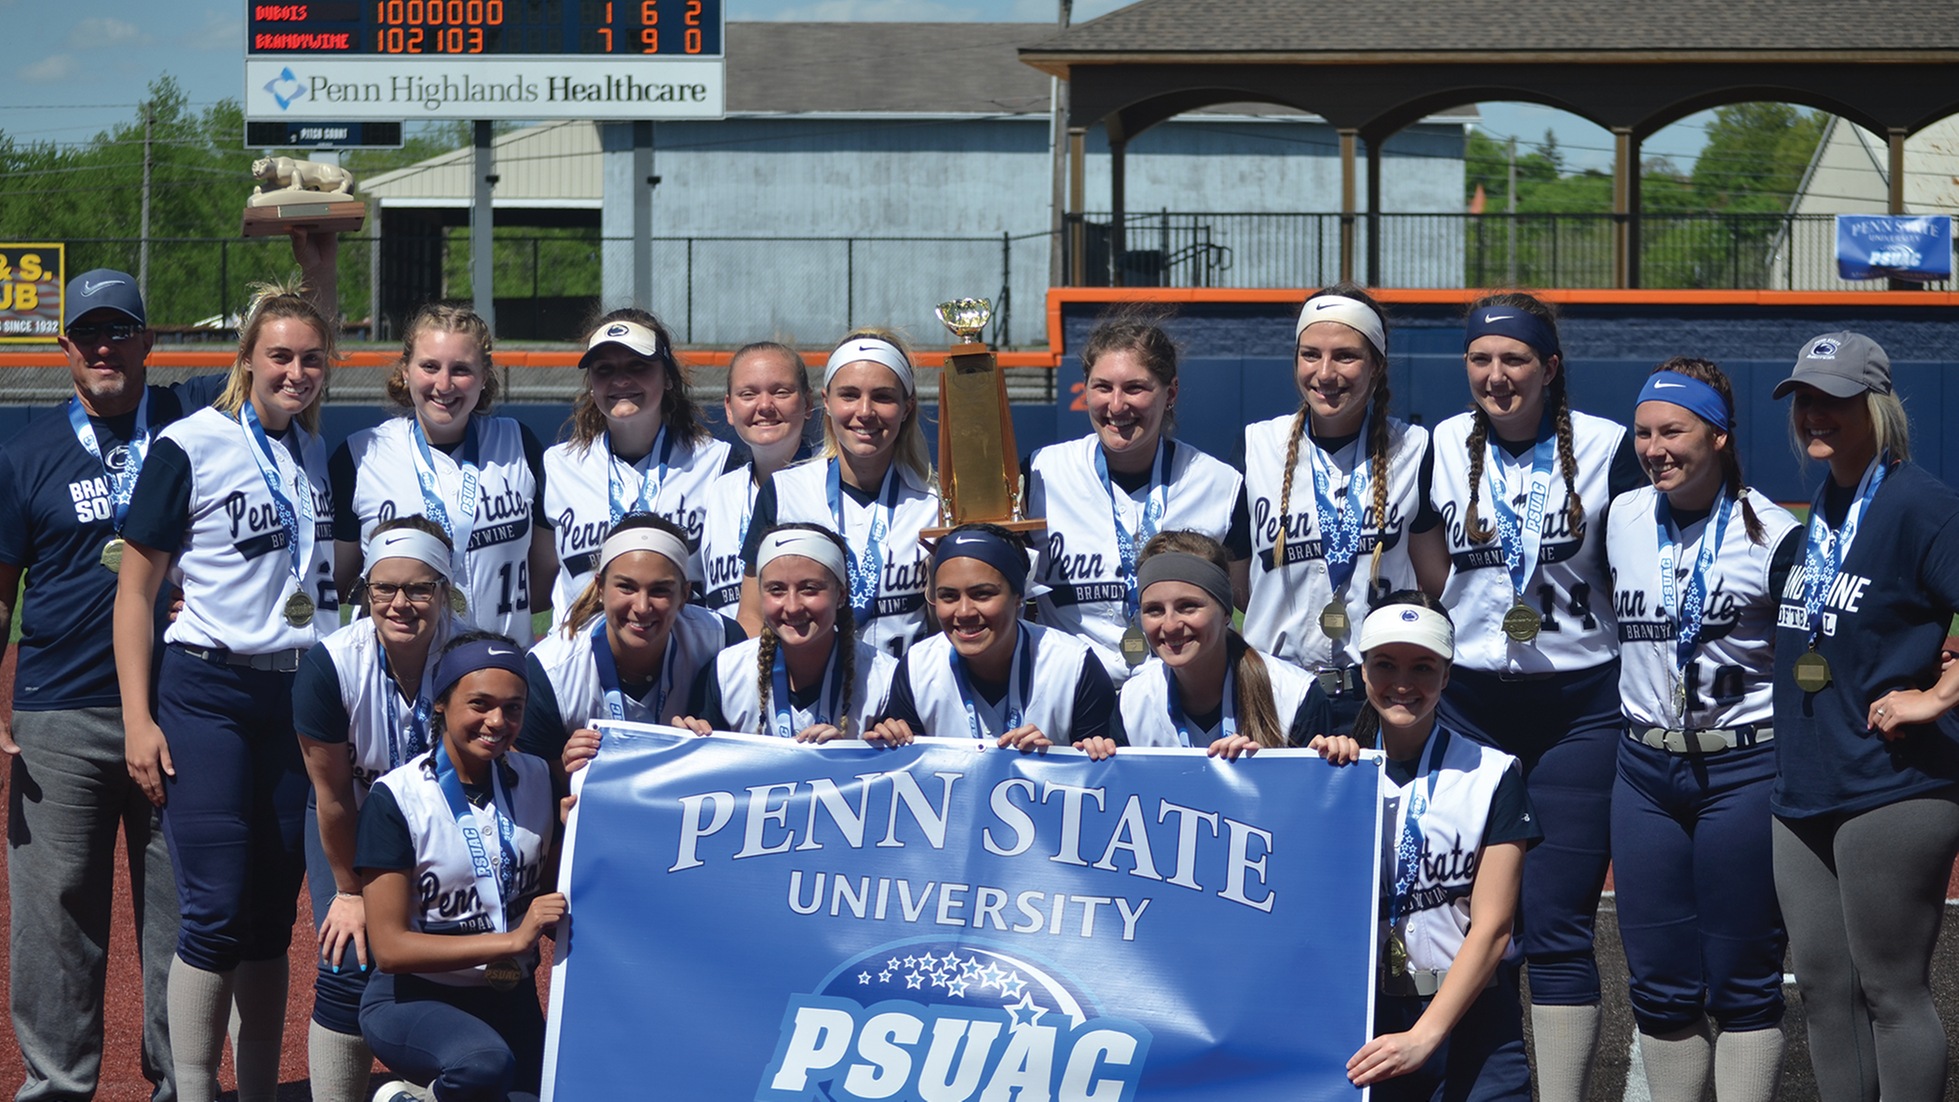 2019 PSUAC Champions Penn State Brandywine